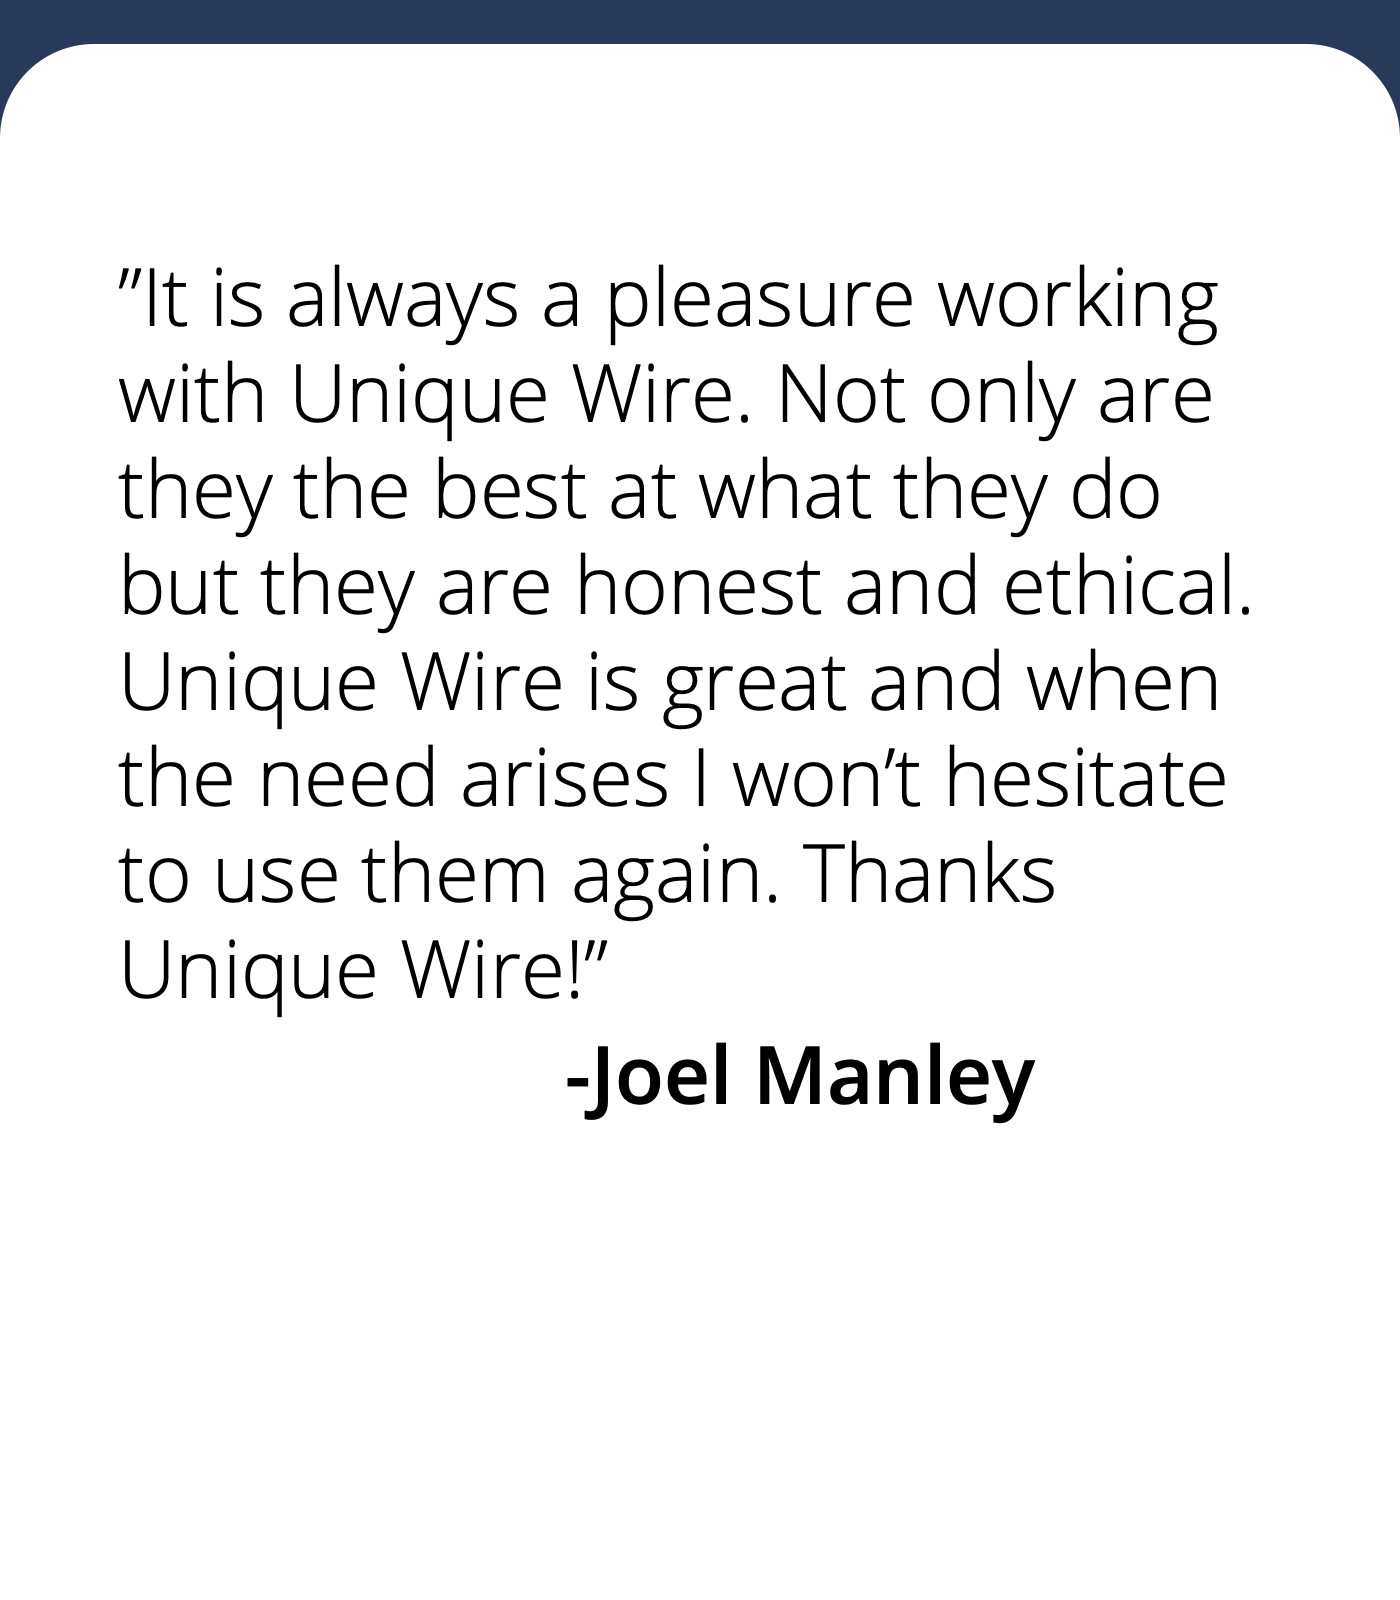 Joel Manley